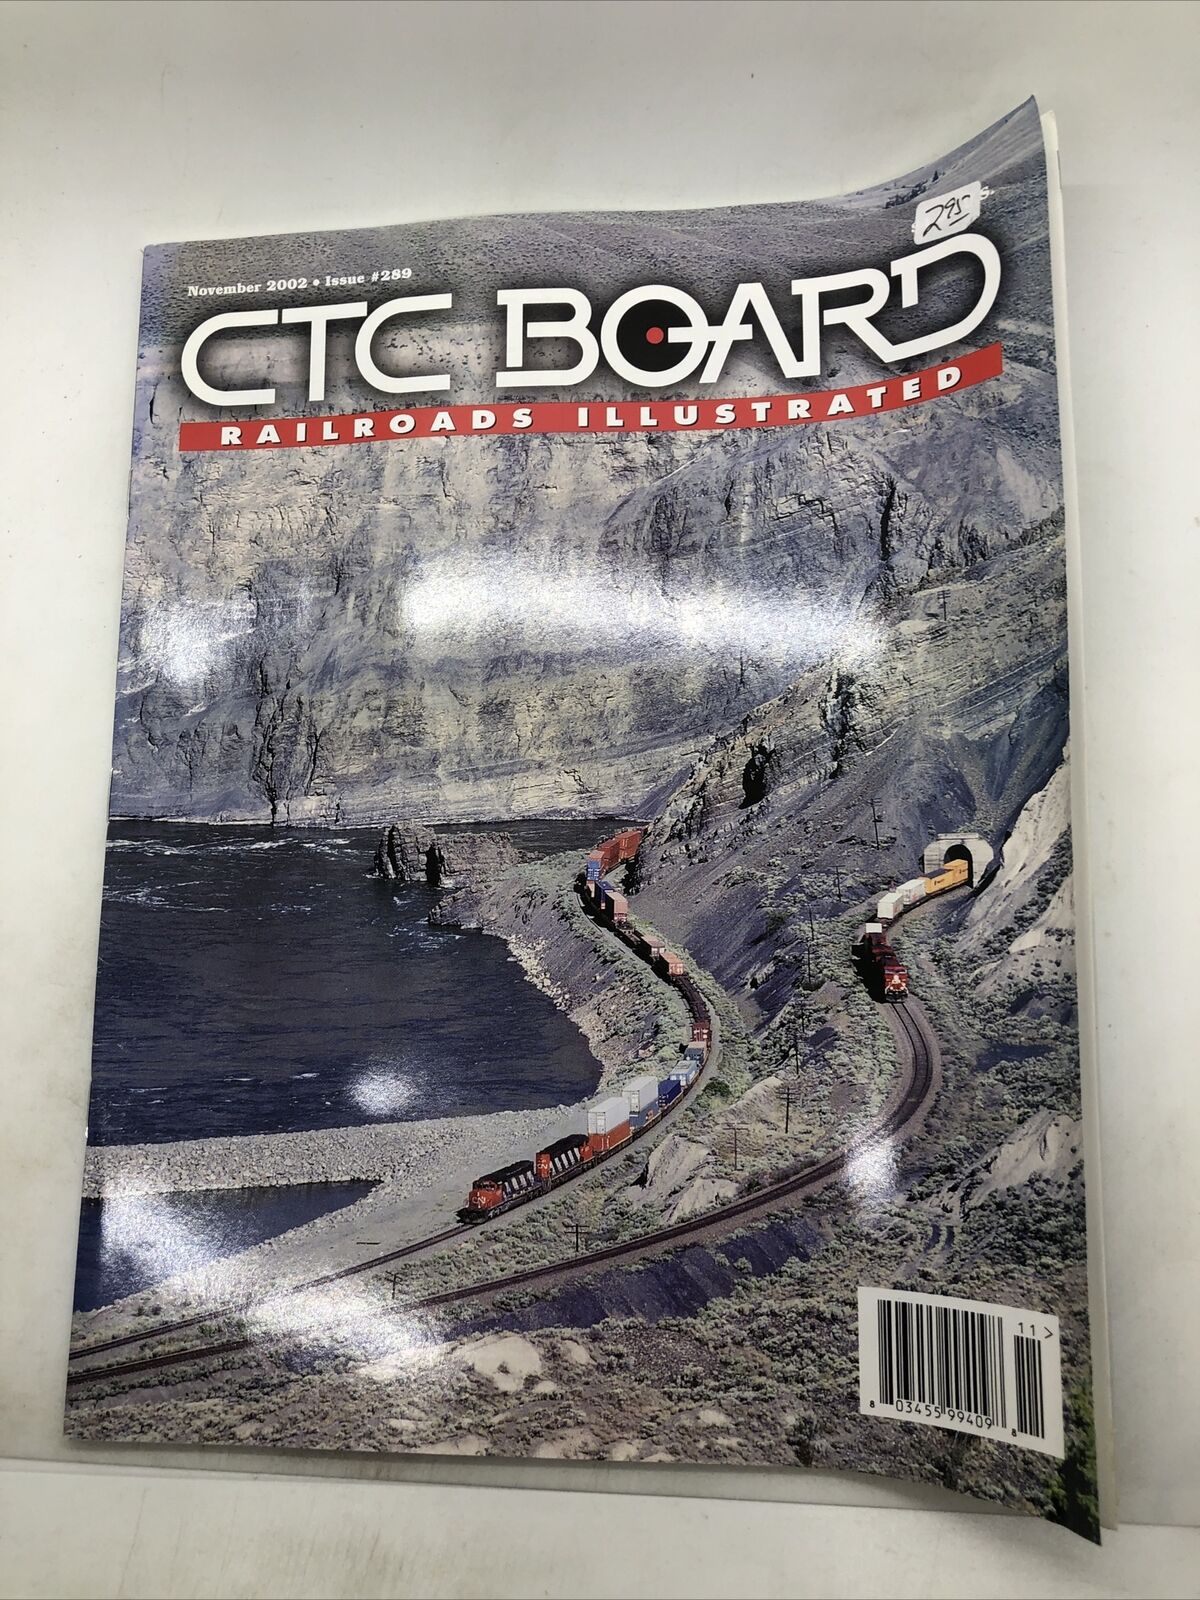 CTC Board Railroad Illustrated Magazine - November 2002